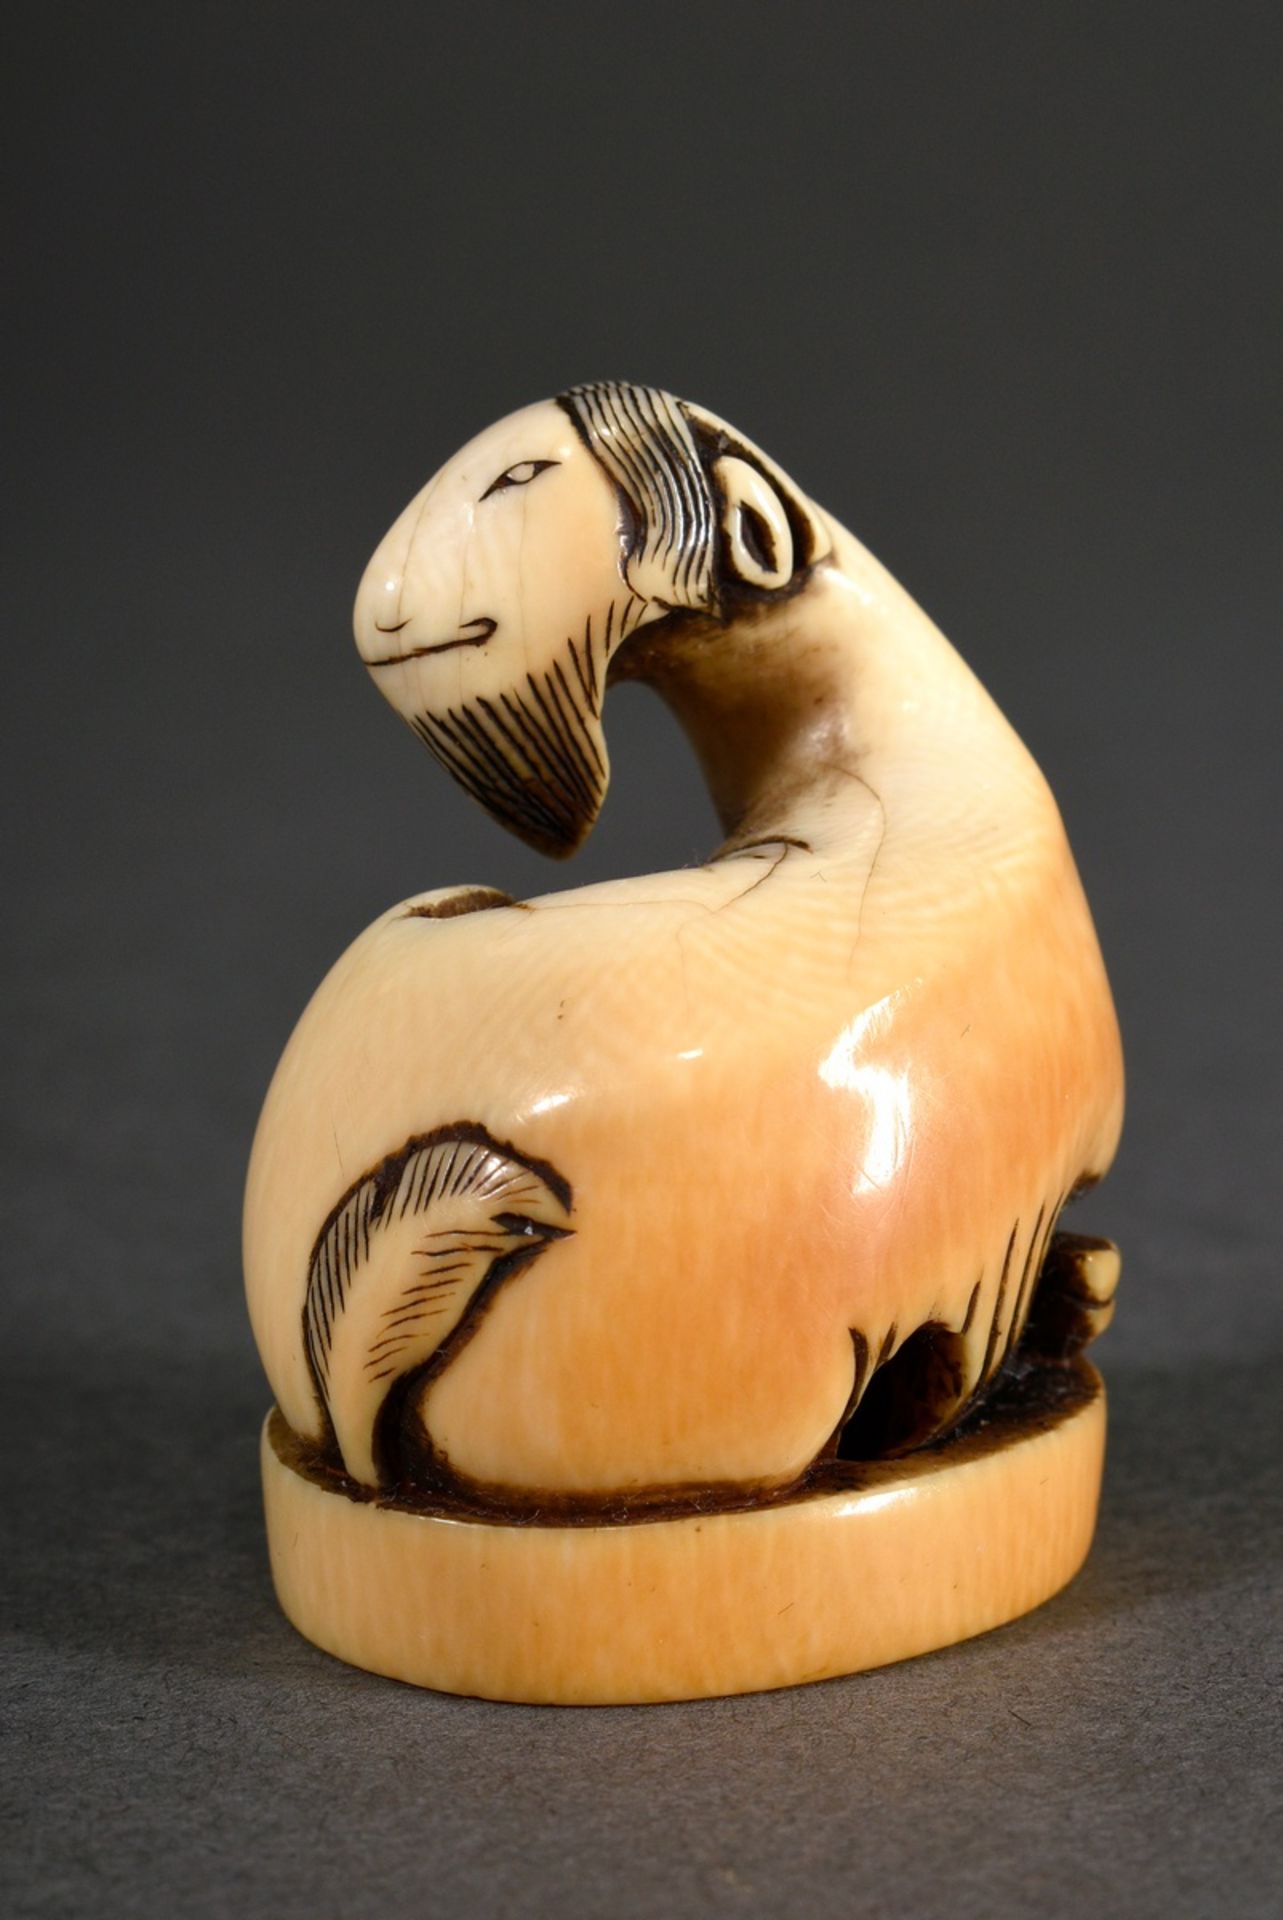 Ivory netsuke "Goat on oval base", Japan, 18th/19th c., beautiful patina, h. 4,3cm, provenance: Nor